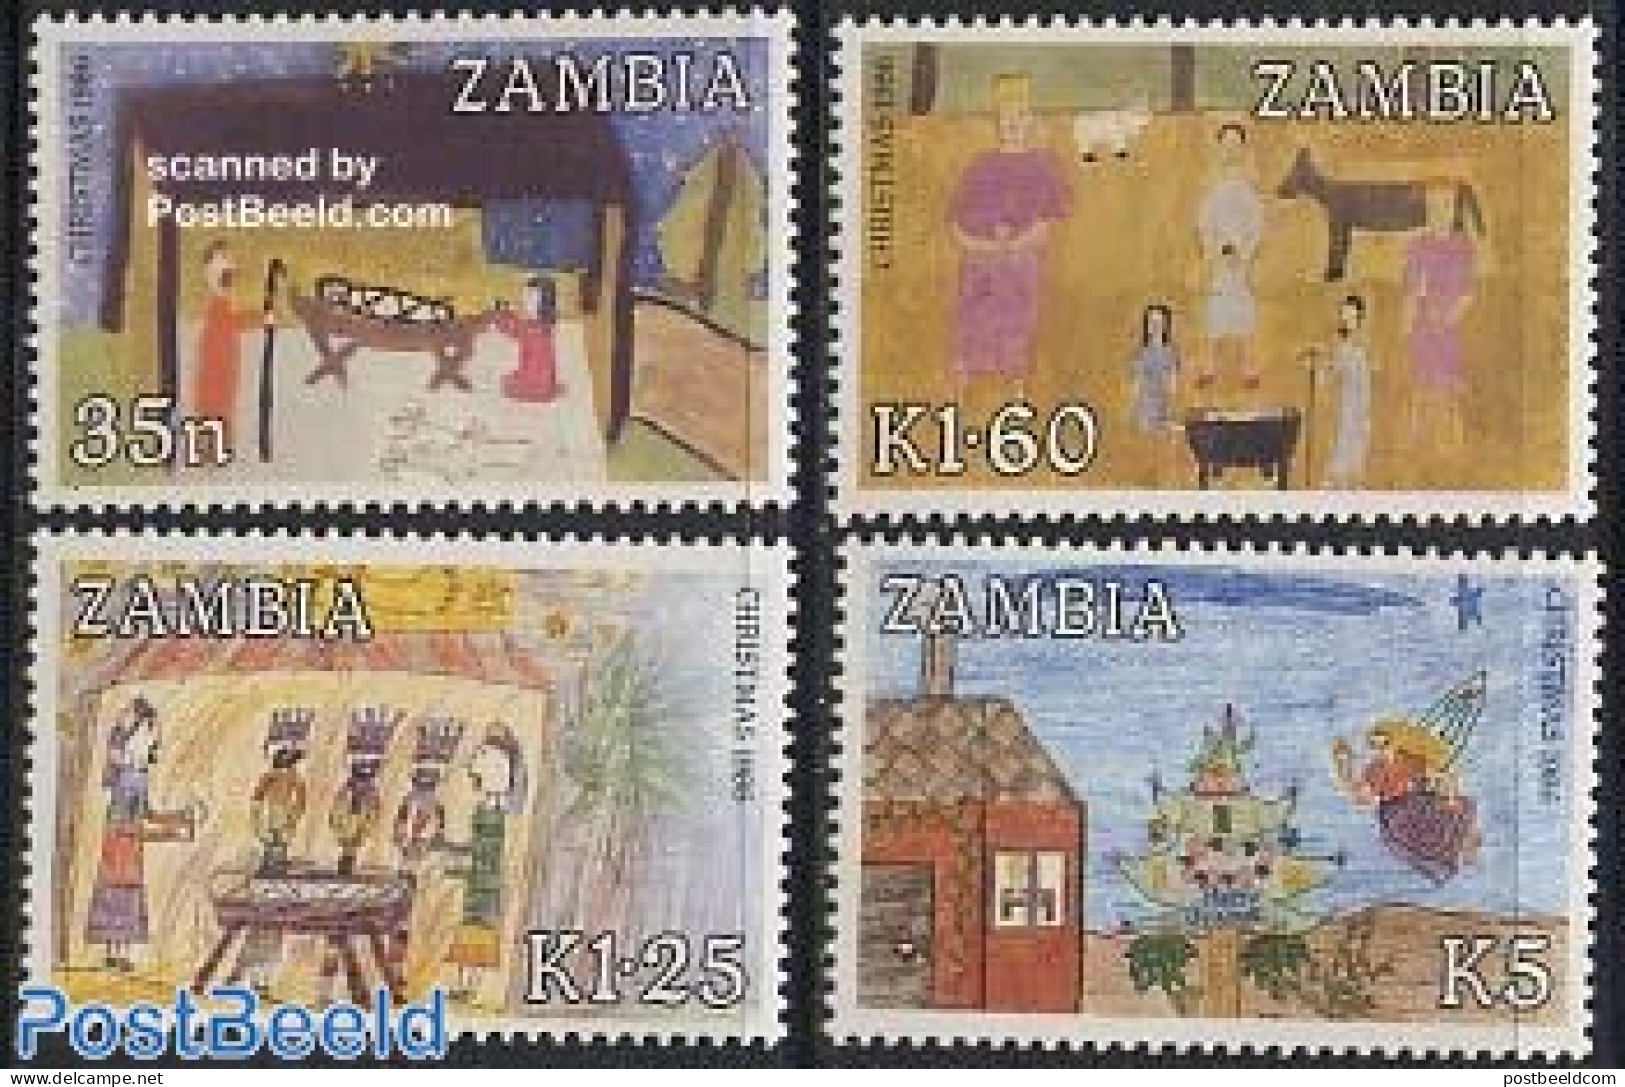 Zambia 1986 Christmas 4v, Mint NH, Religion - Christmas - Art - Children Drawings - Weihnachten